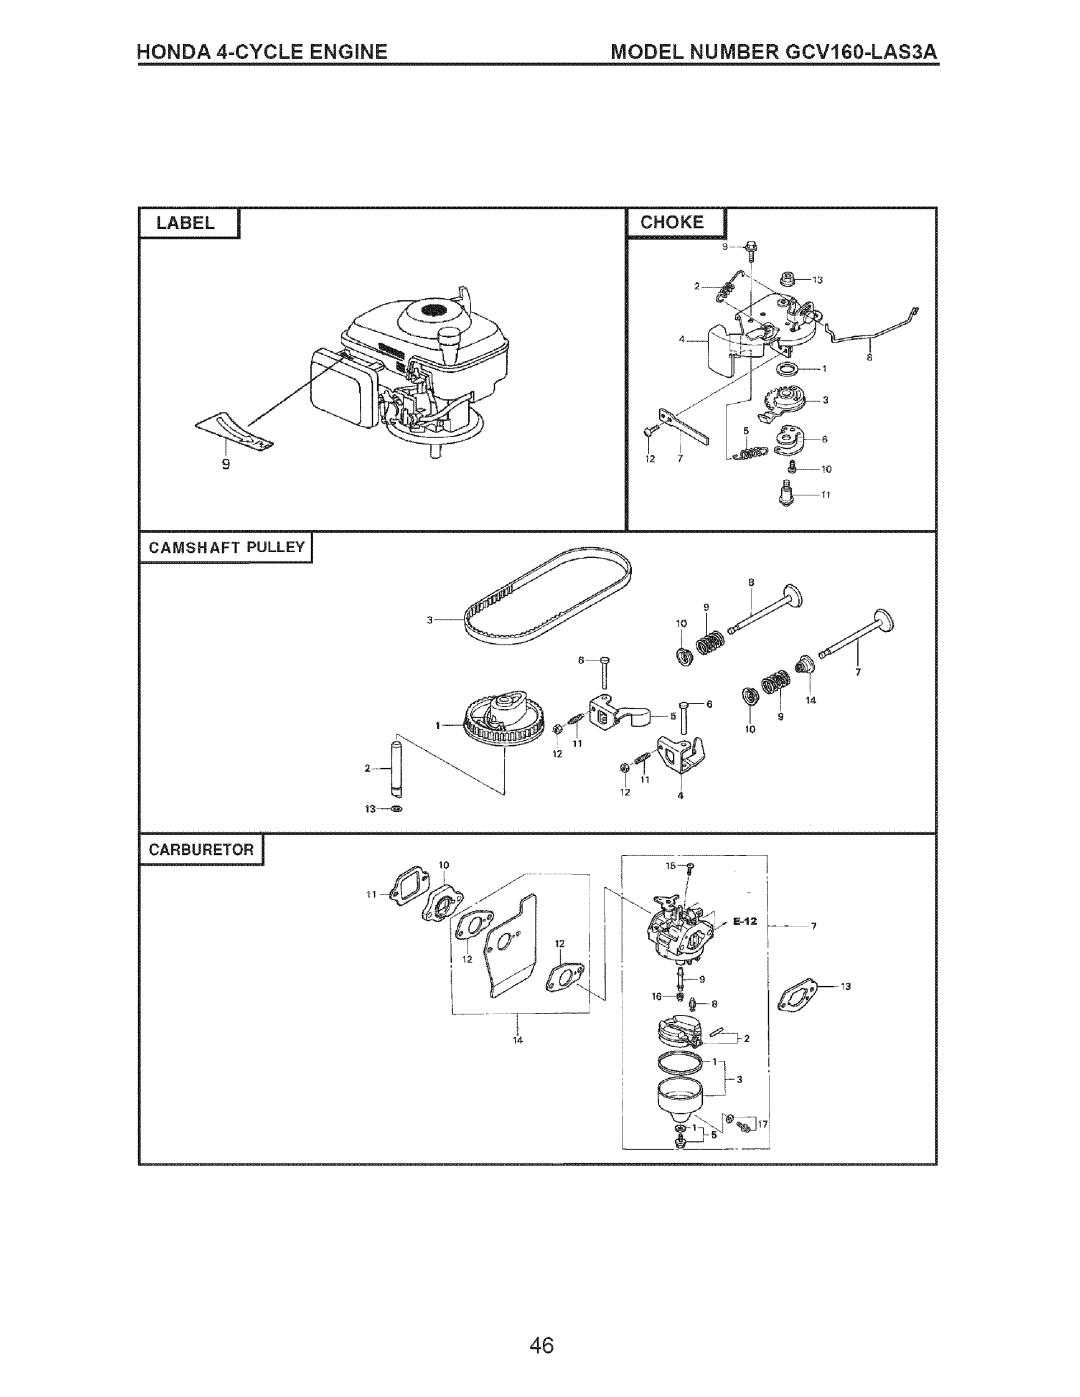 Craftsman 917-371813 manual HONDA 4=CYCLE ENGINE, MODEL NUMBER GCV160-LAS3A, Label, Choke, Camshaft Pulley 